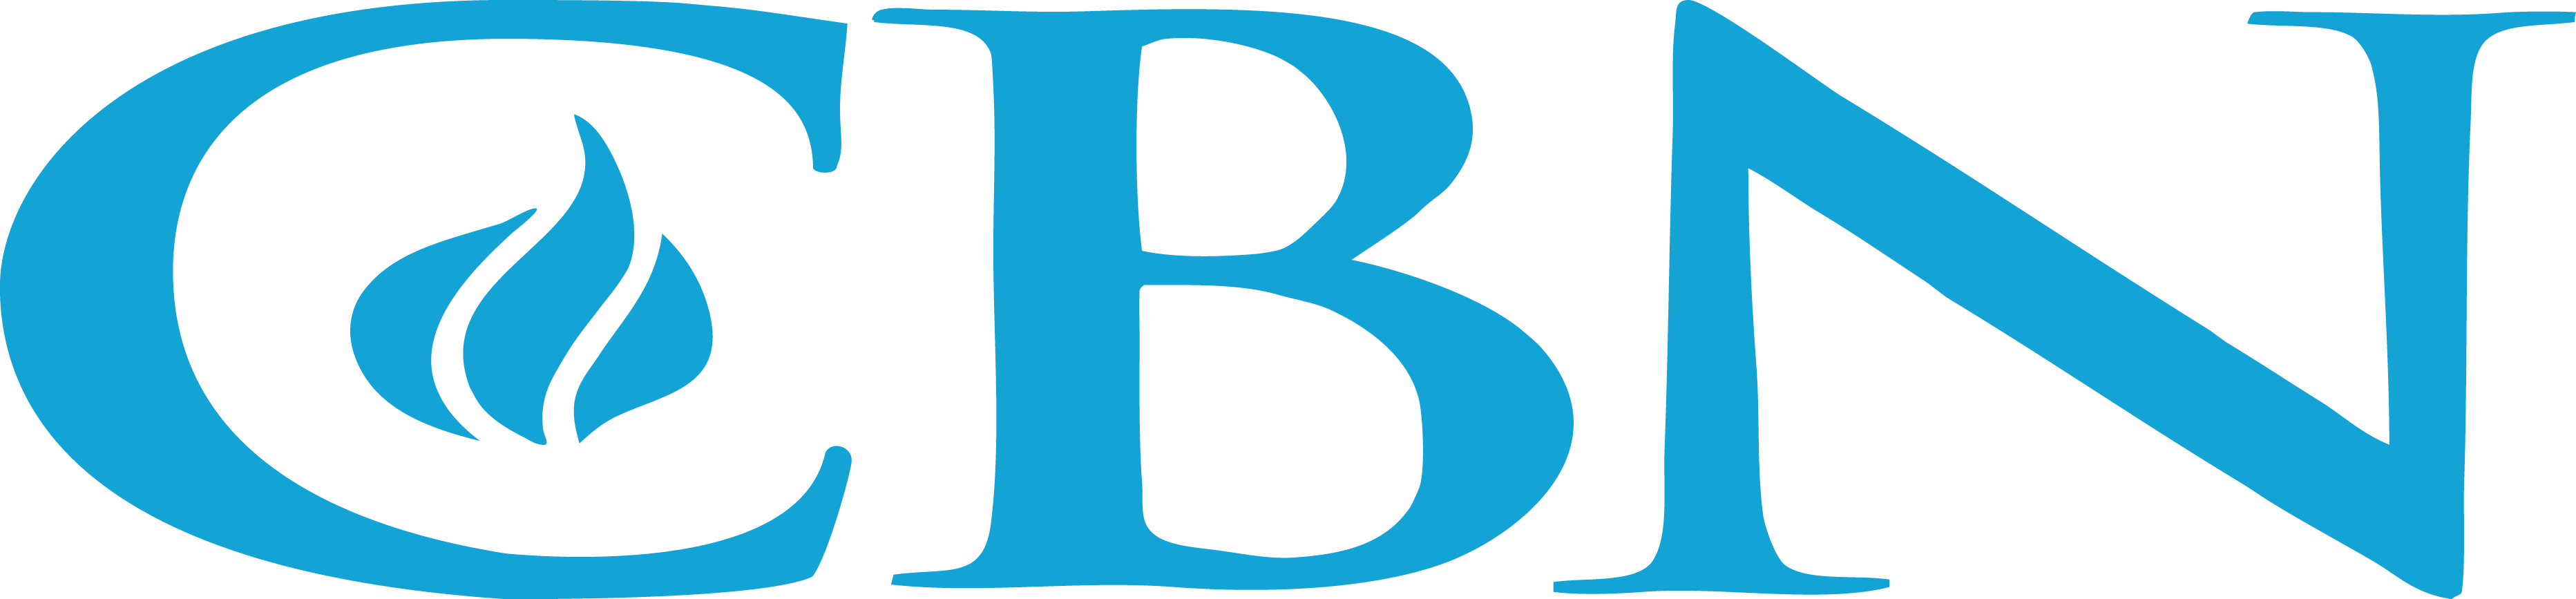 CBN-blue-vector-logo